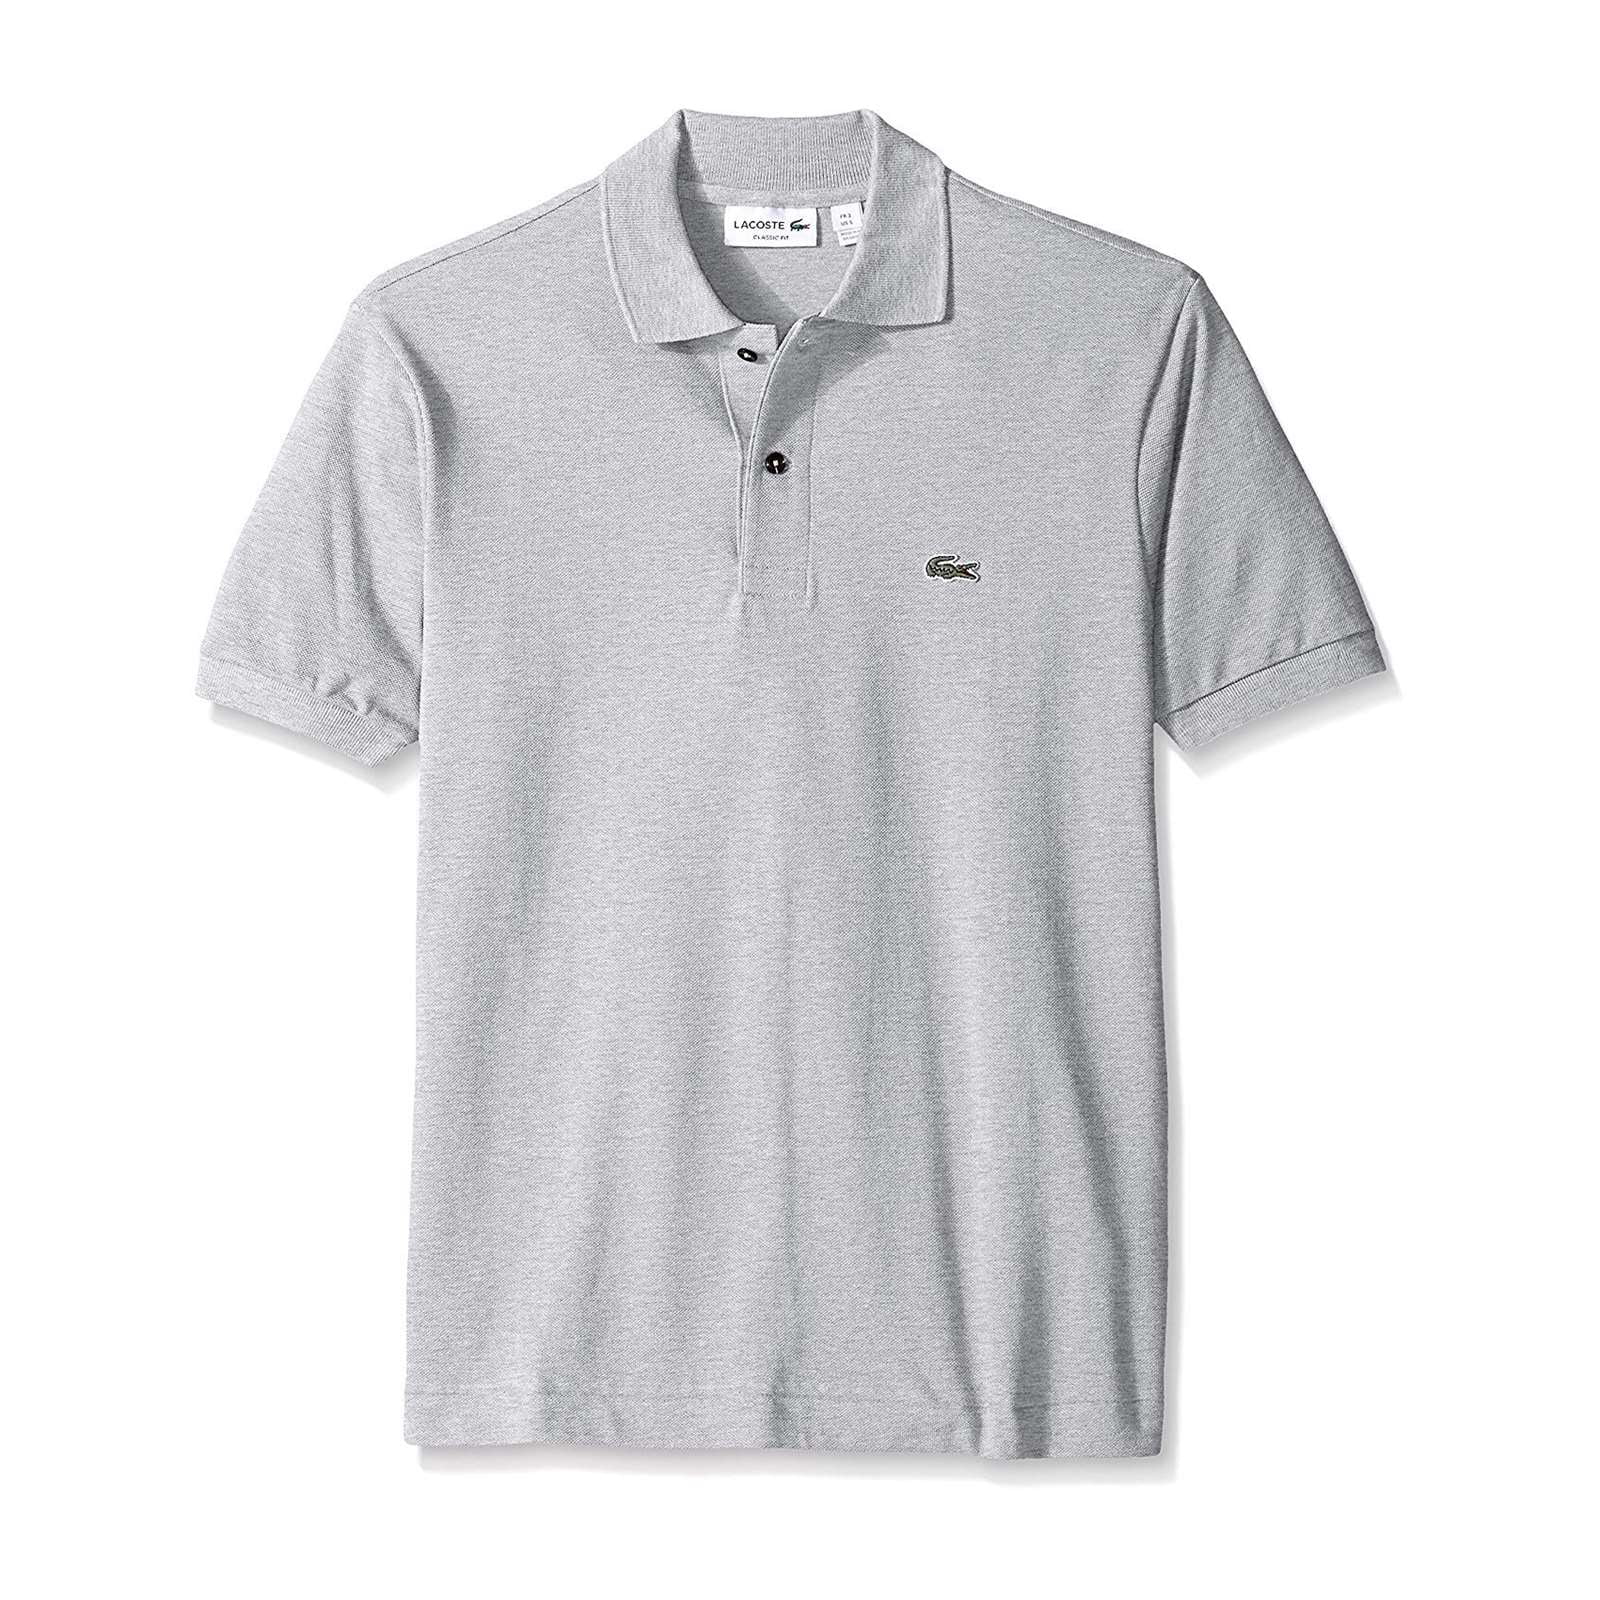 classic short sleeve pique shirt, silver/grey, x-large - Walmart.com